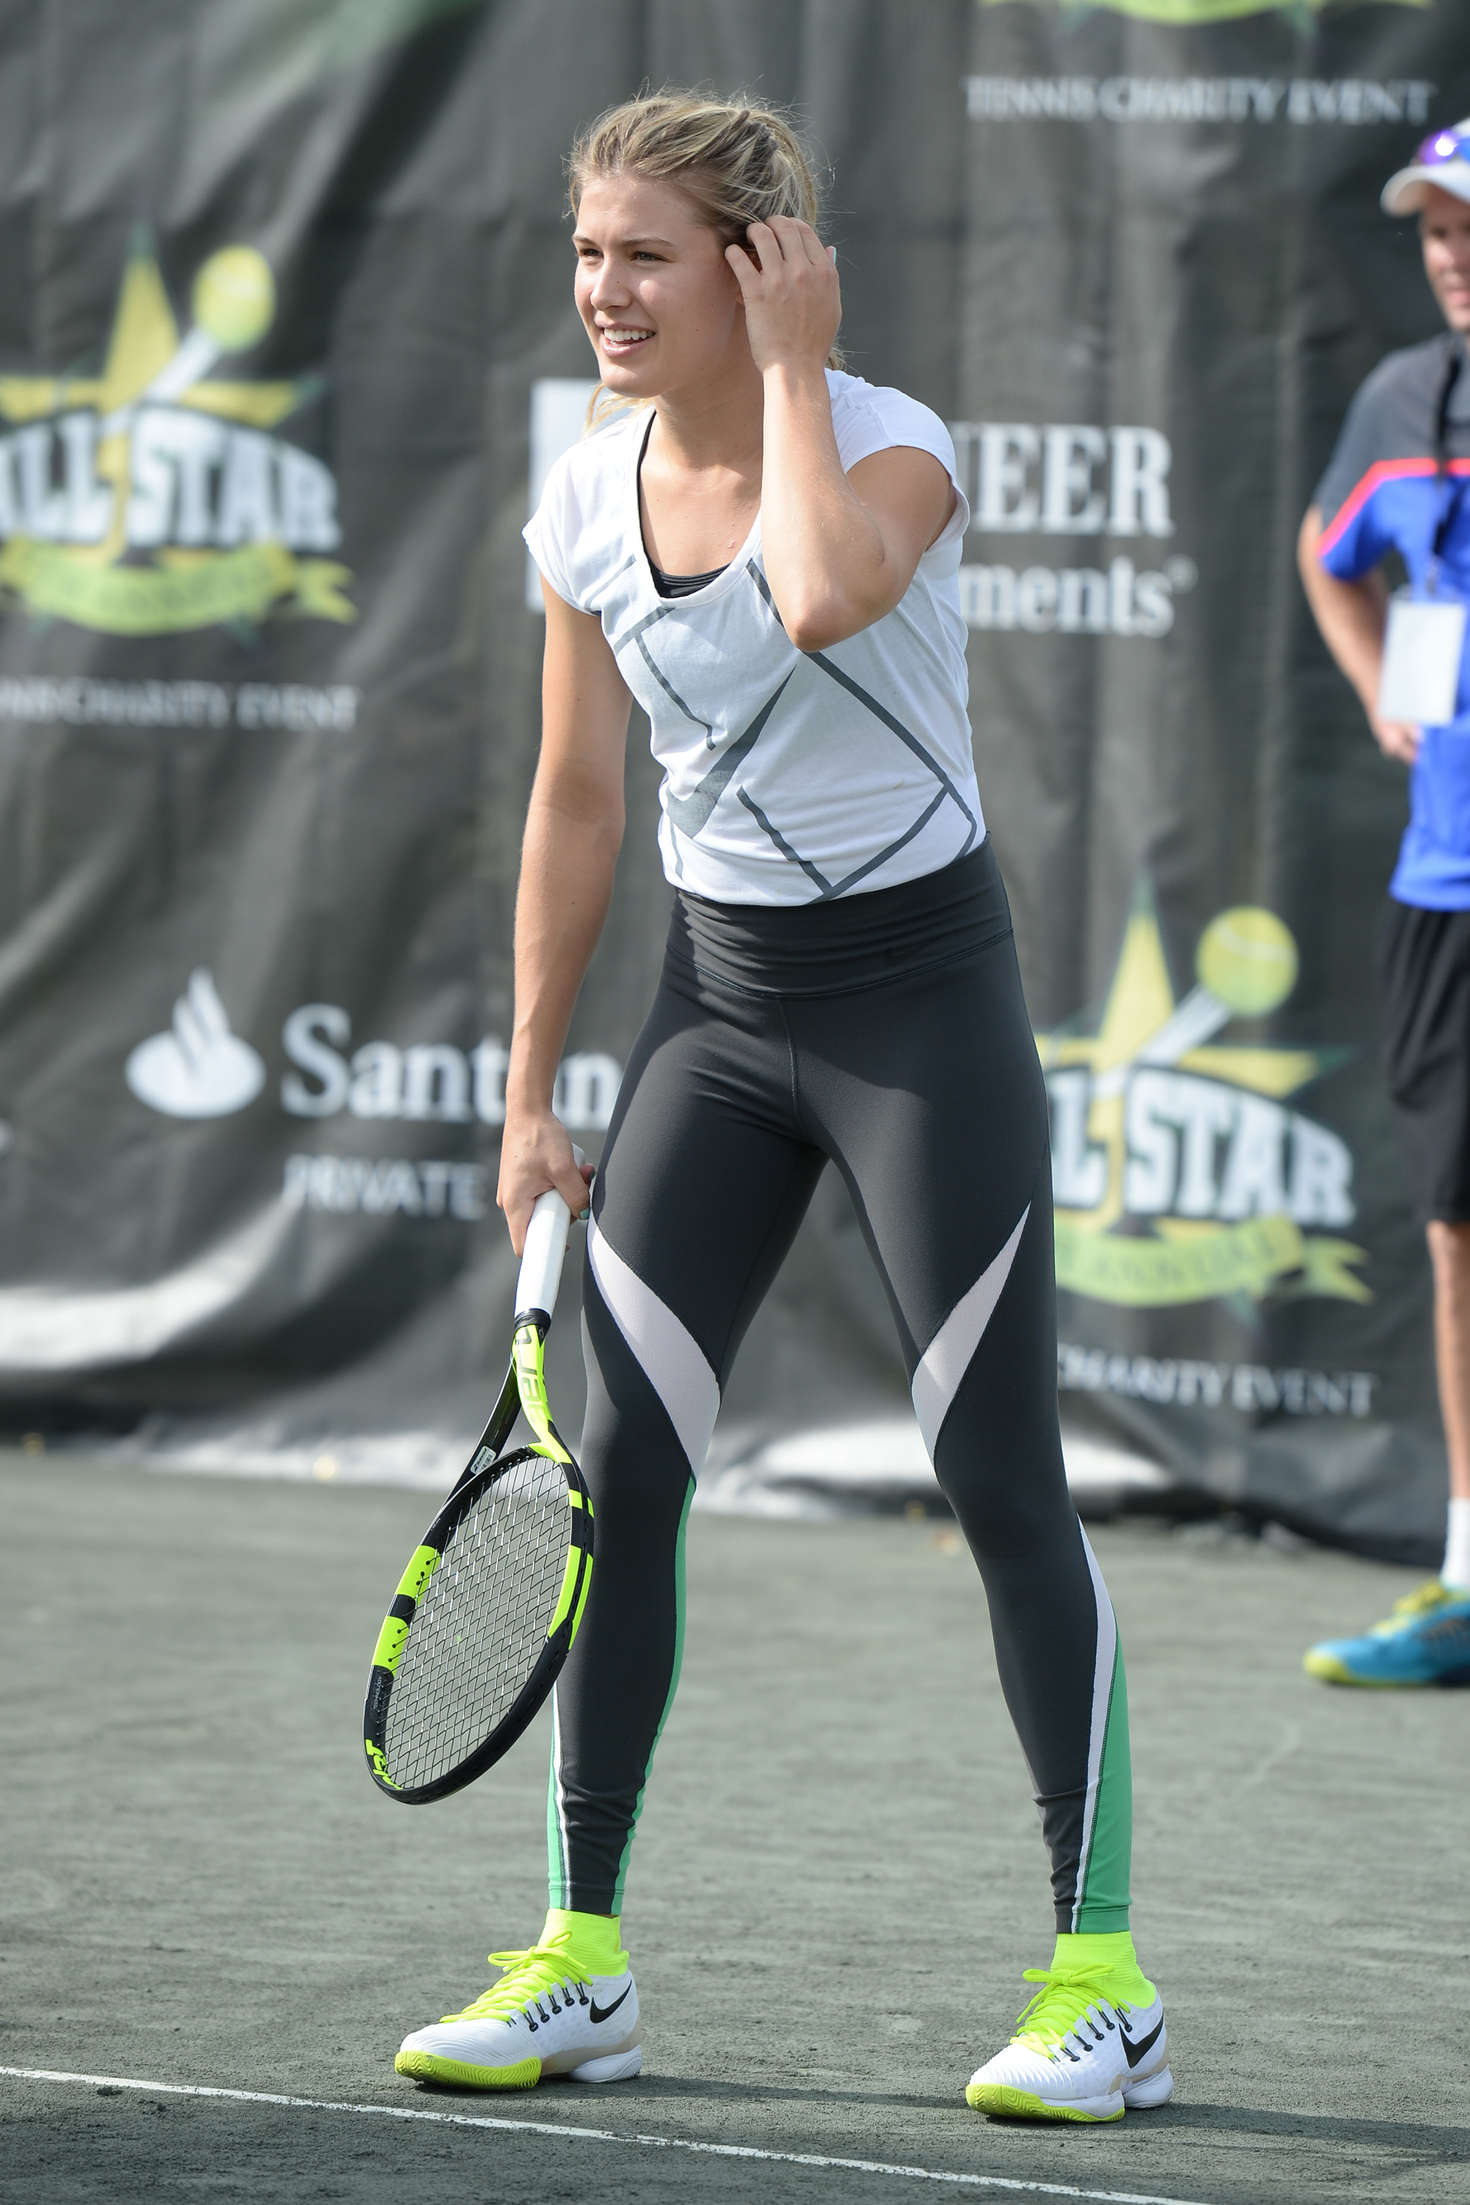 Eugenie Bouchard â€“ All Star Tennis Event at The Miami Open 2016 in Miami